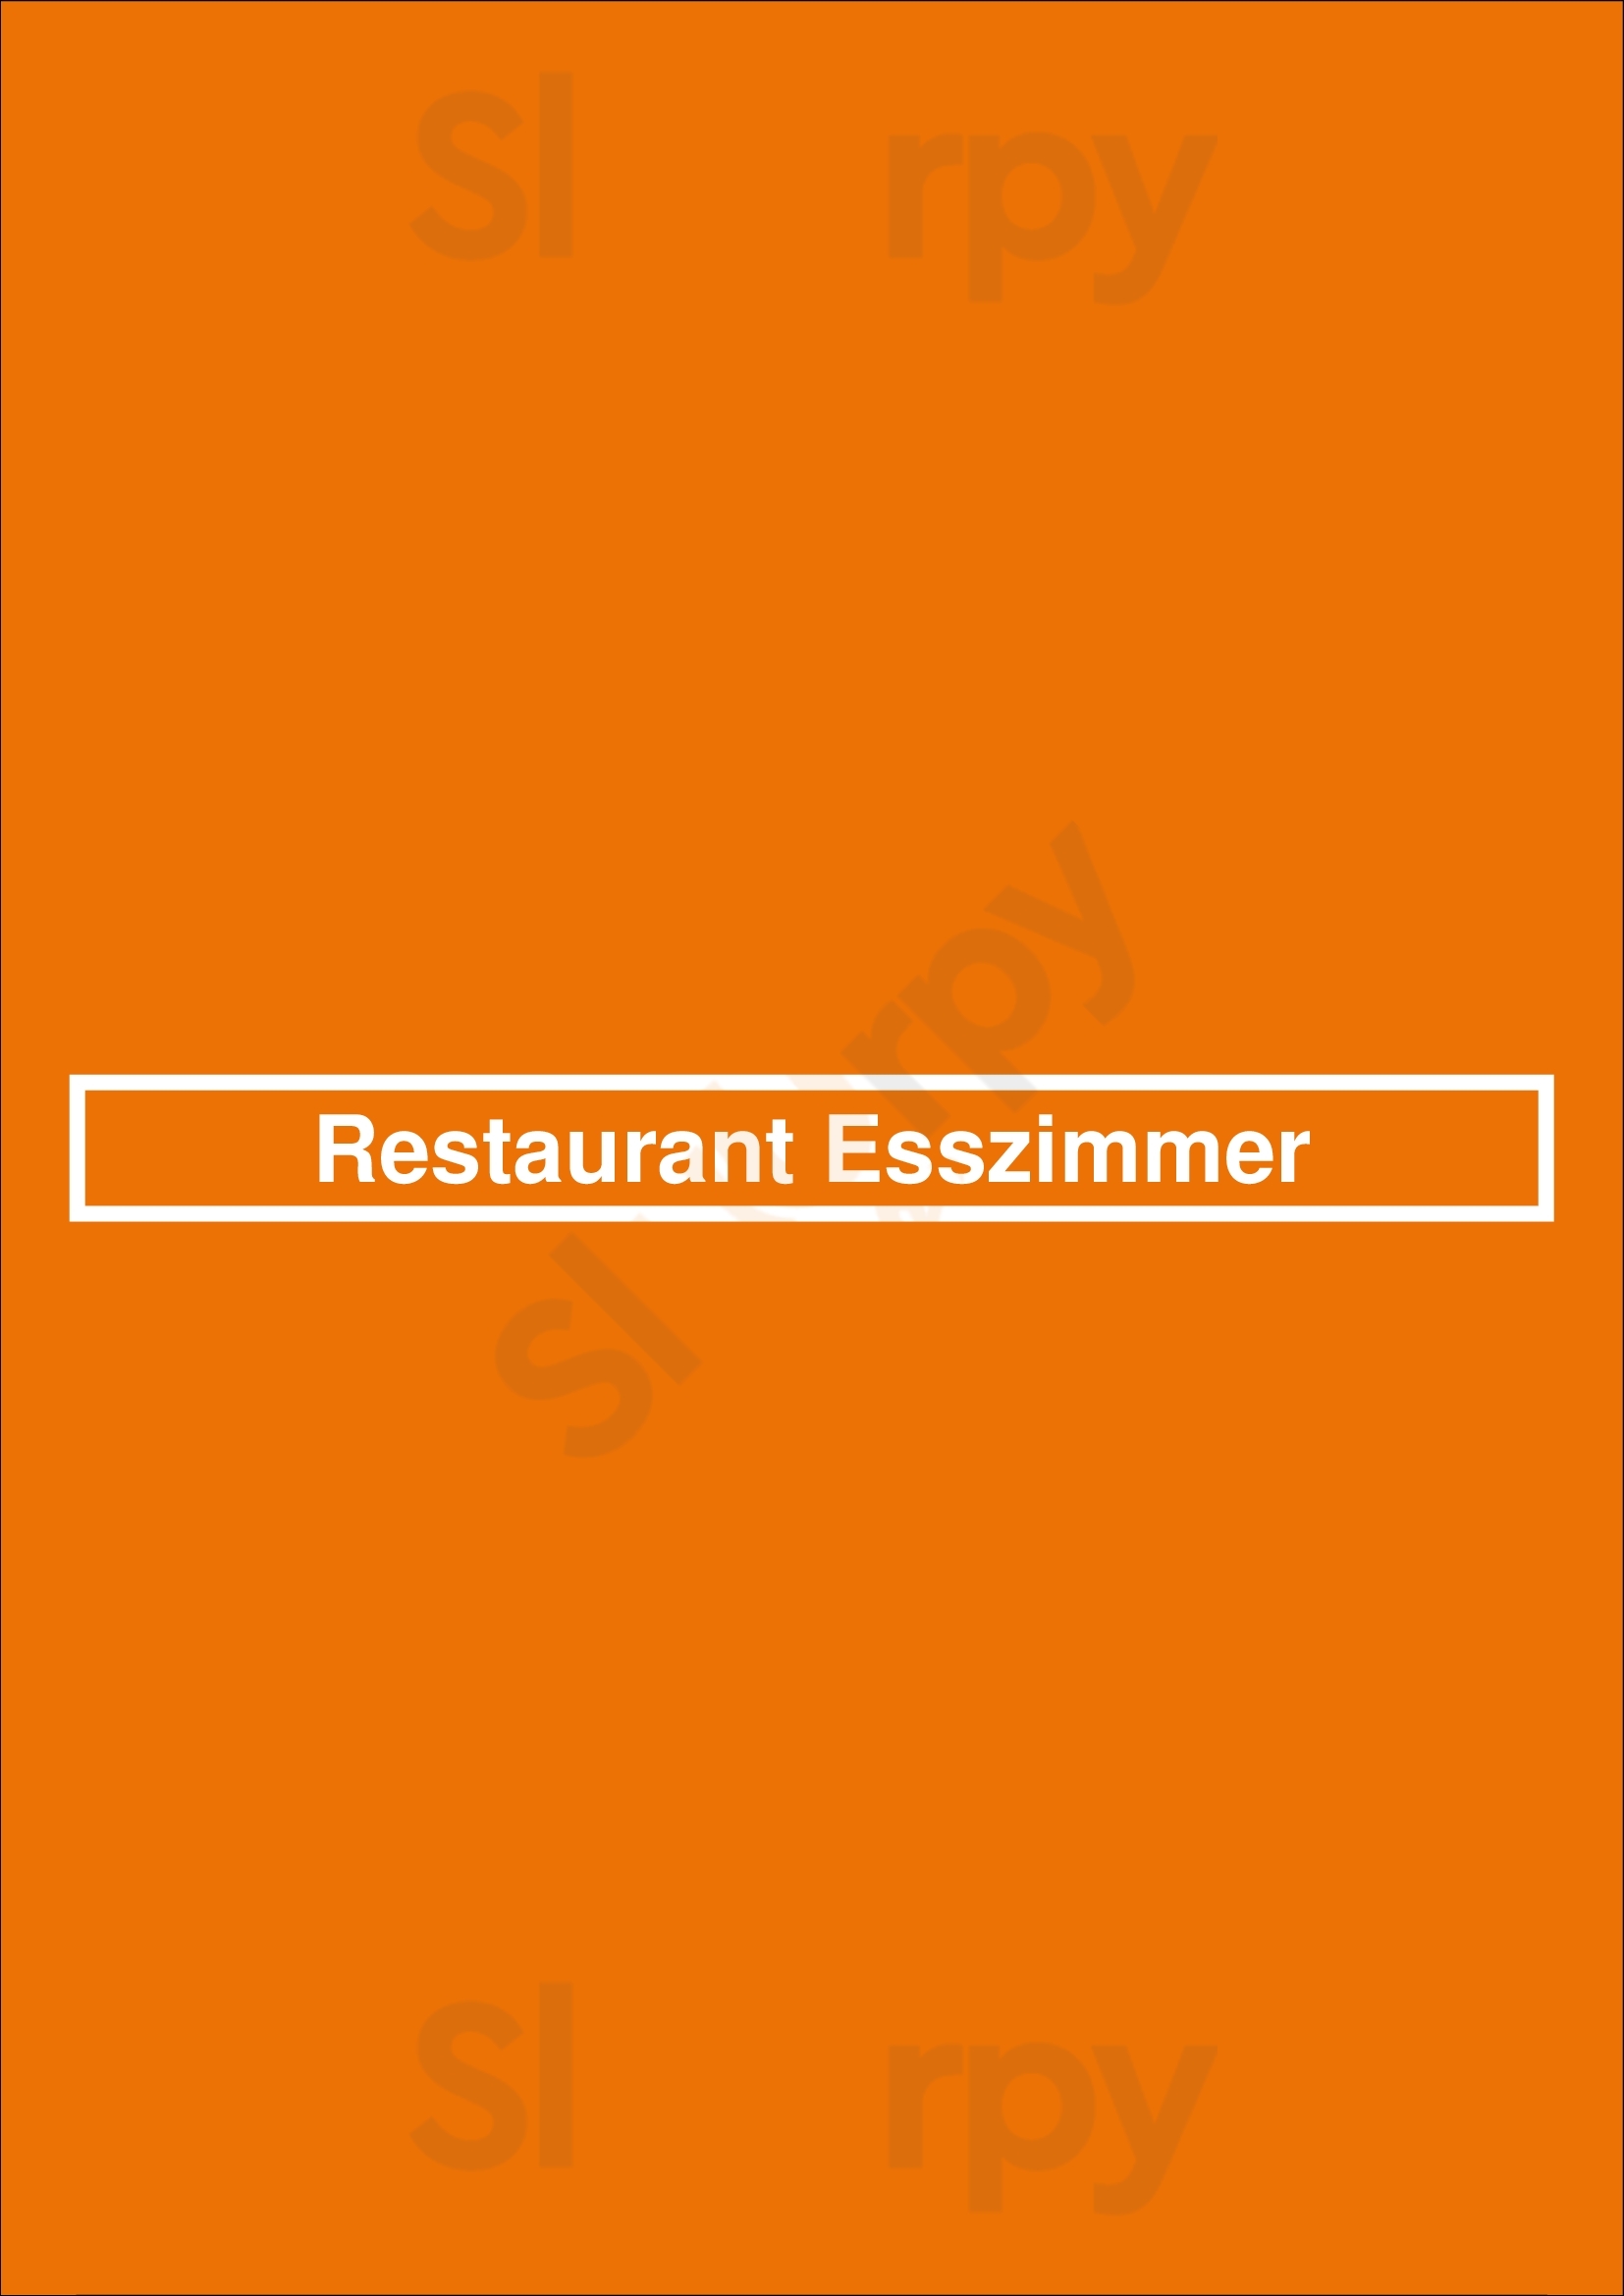 Restaurant Esszimmer Berlin Menu - 1